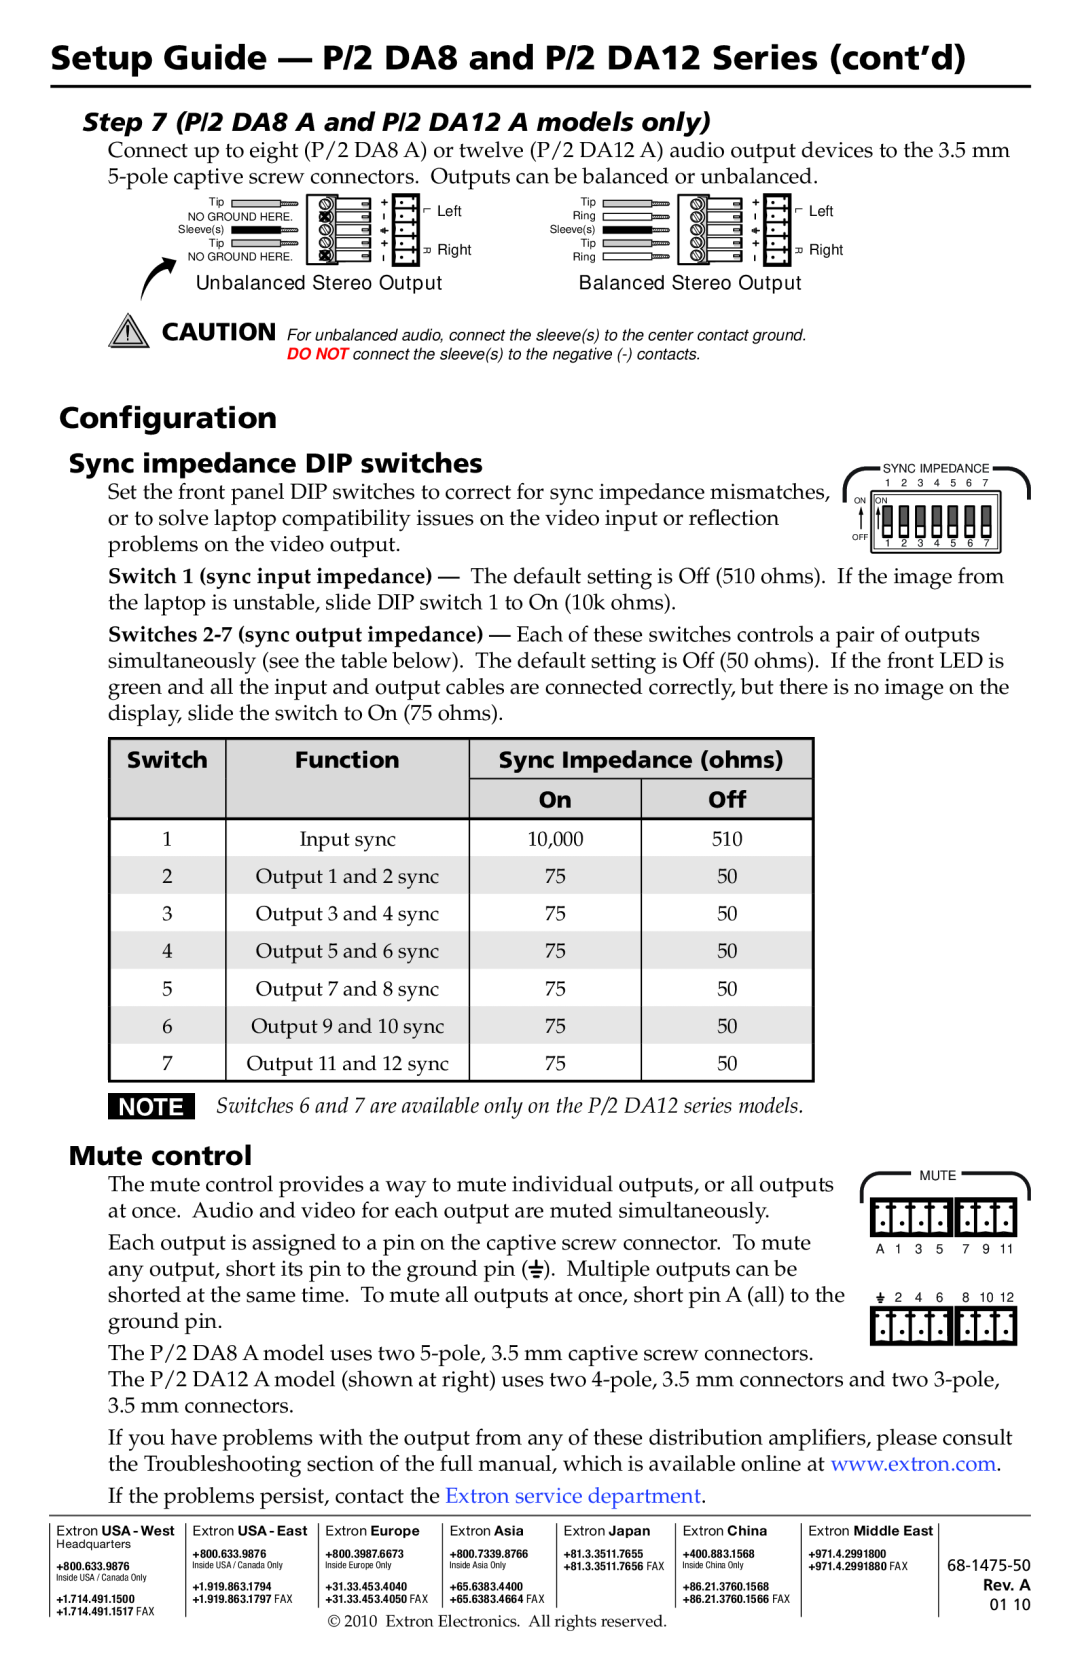 Extron electronic Configuration, P/2 DA8 A and P/2 DA12 A models only, Setup Guide -­P/2 DA8 and P/2 DA12 Series cont’d 